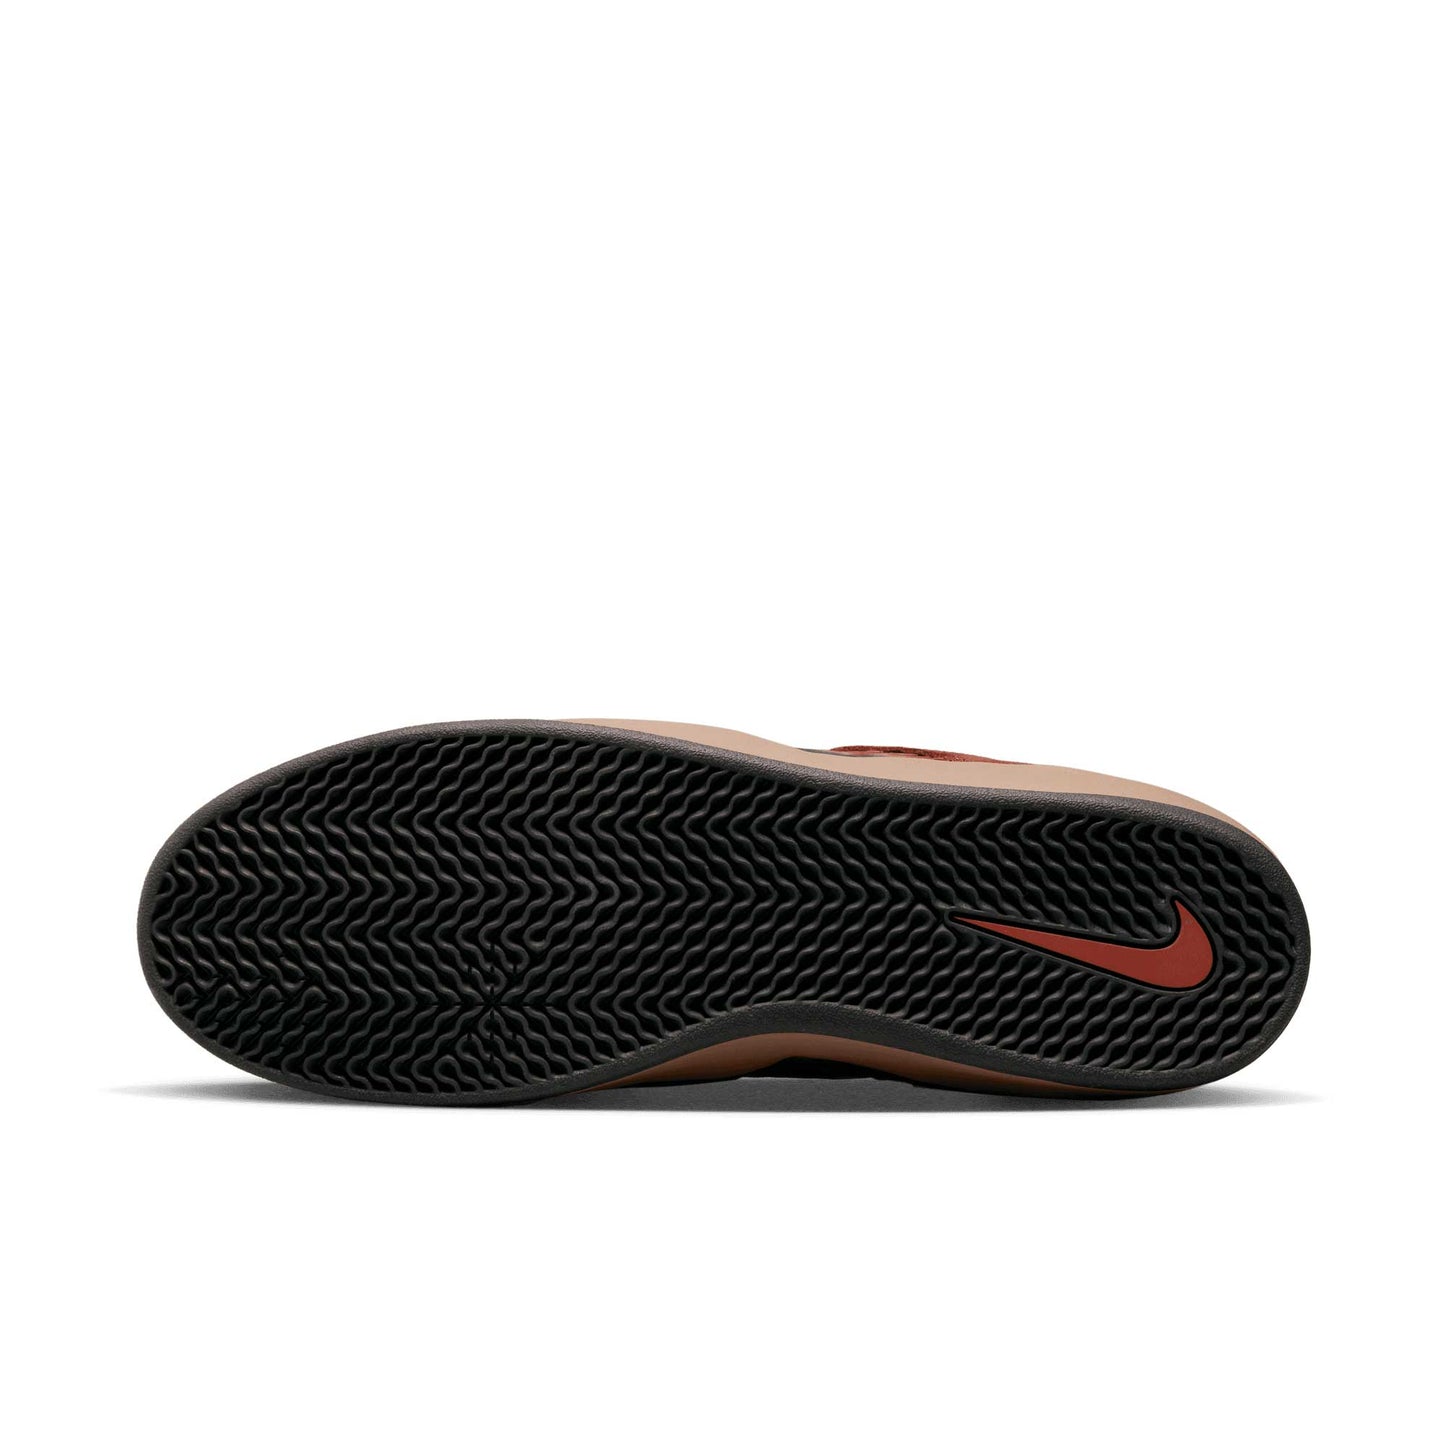 Nike SB Ishod Wair, rugged orange/black-mineral clay-black - Tiki Room Skateboards - 6